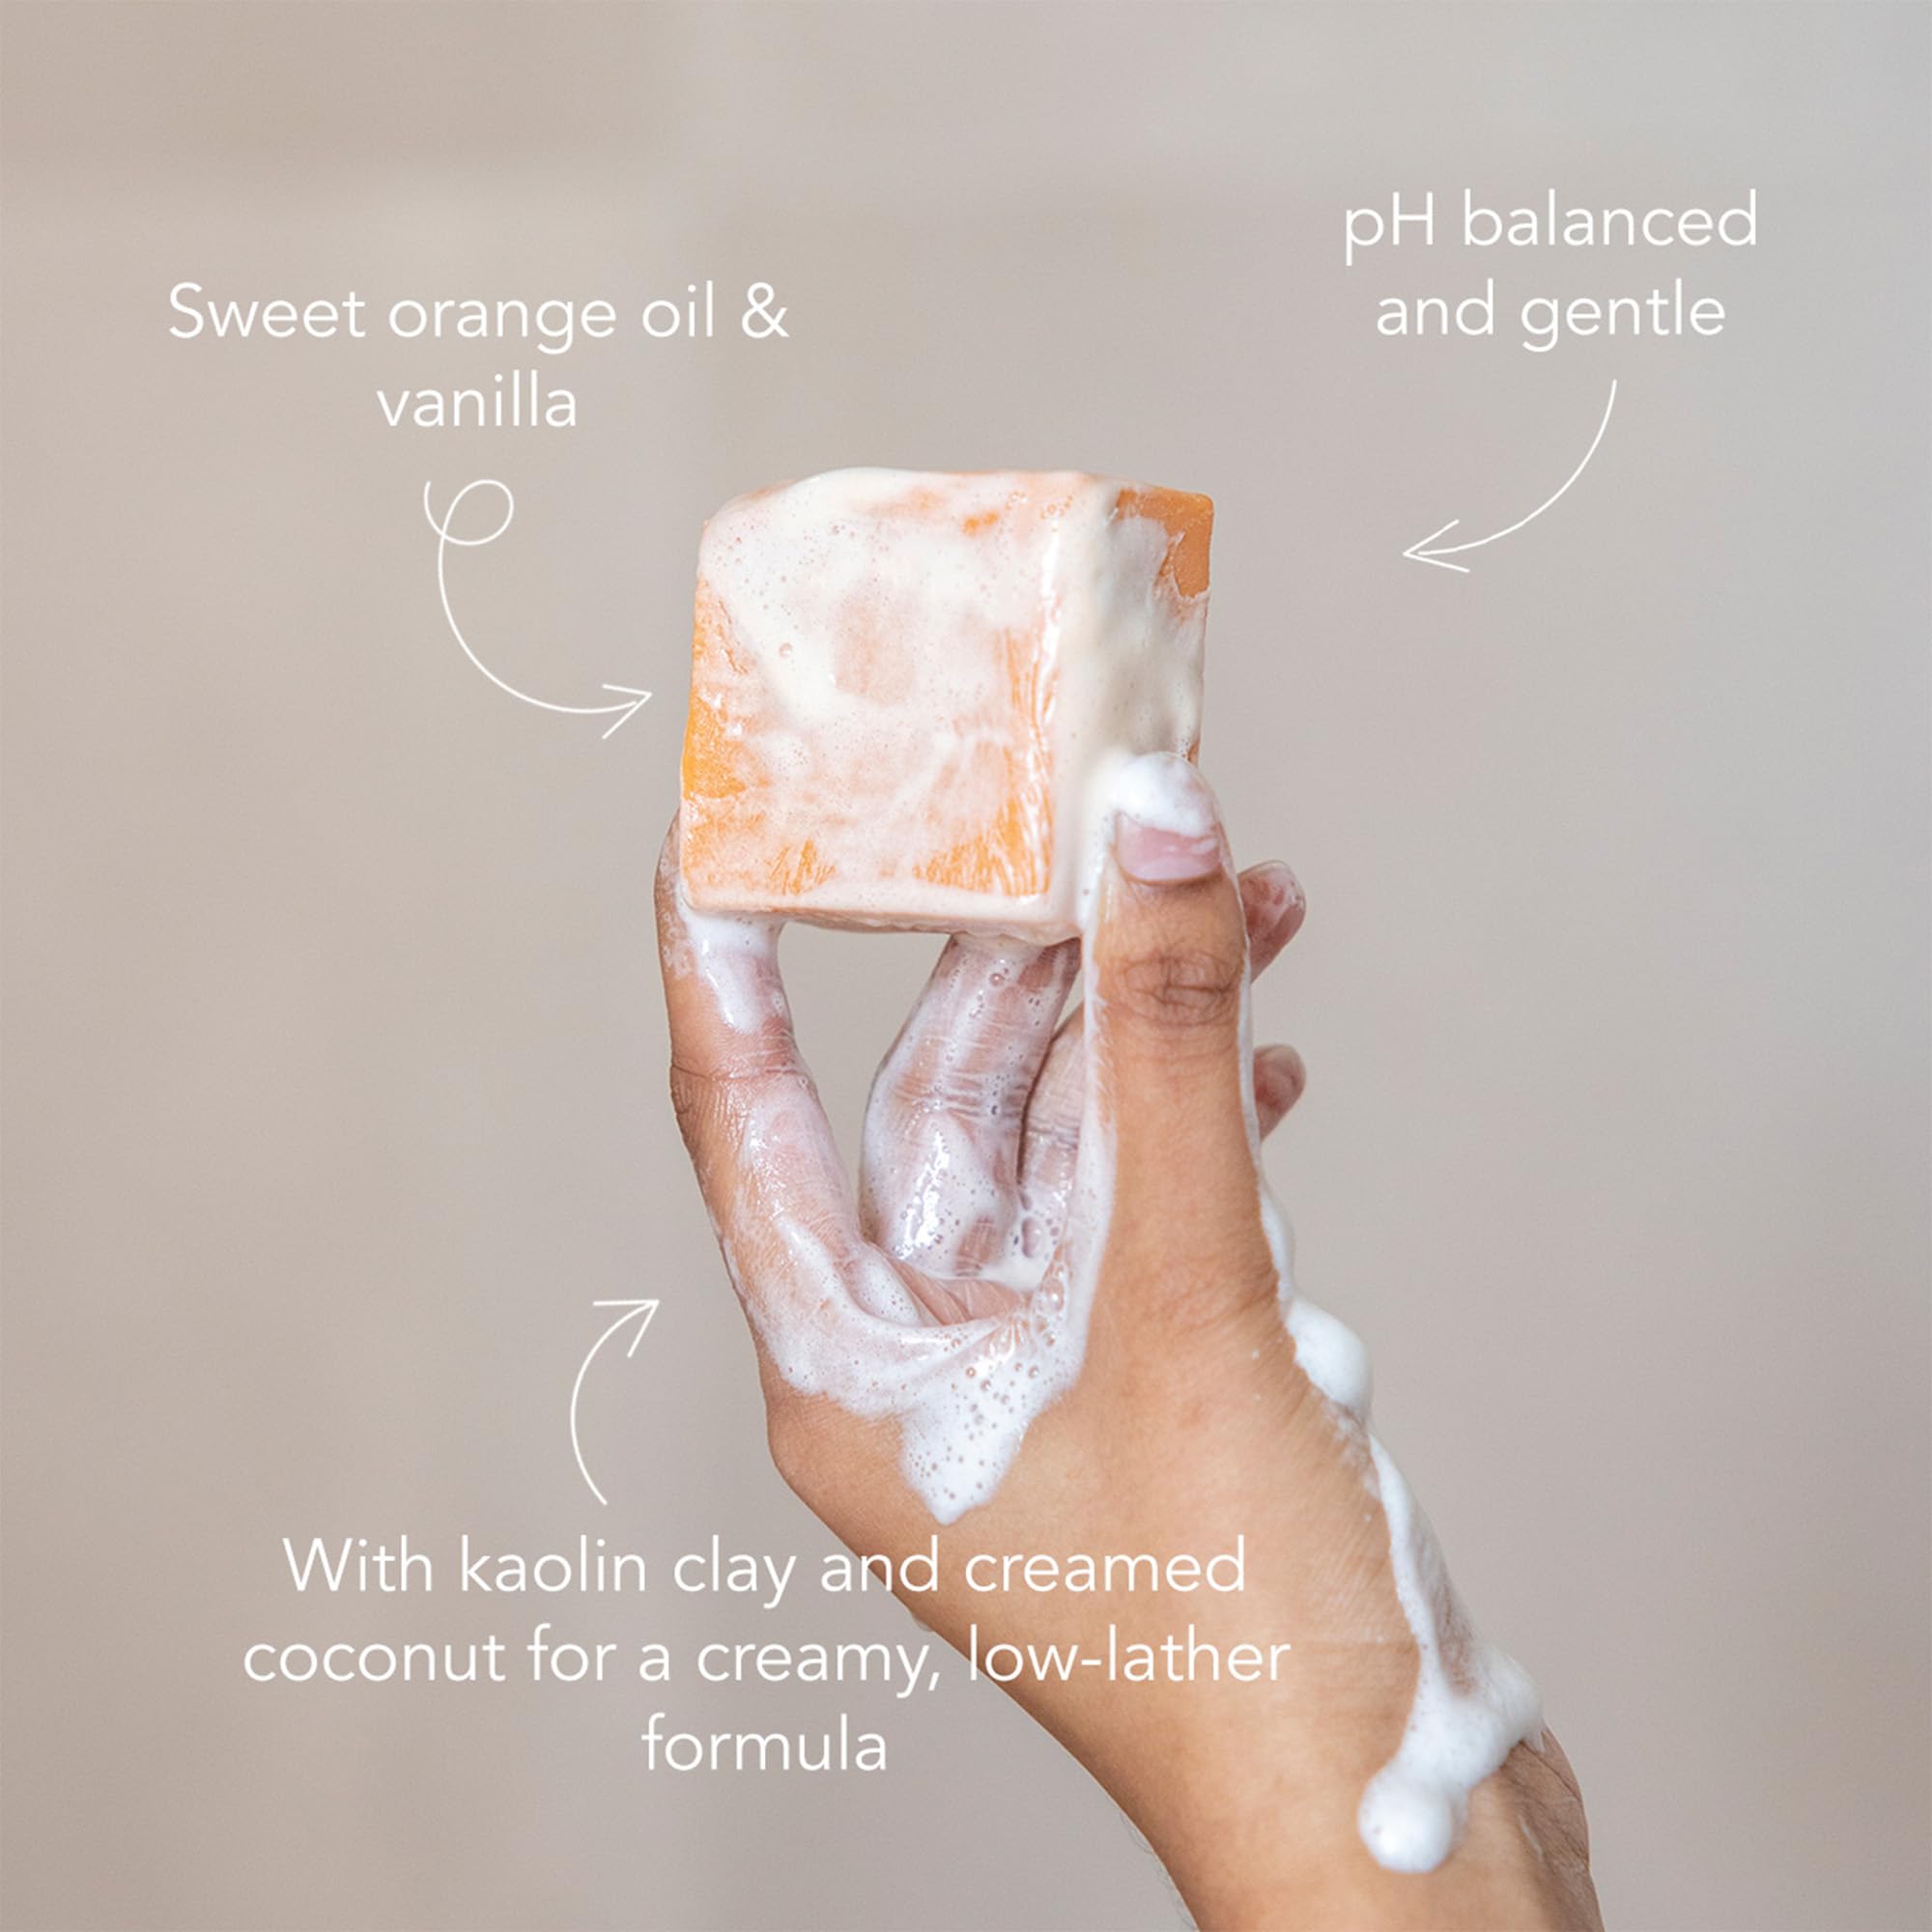 Ethique Sweet Orange & Vanilla Cream Solid Natural Bodywash Soap for Sensitive Skin - Super Hydrating & pH Balanced - Plastic-Free, Vegan, Cruelty-Free, 3.7 oz